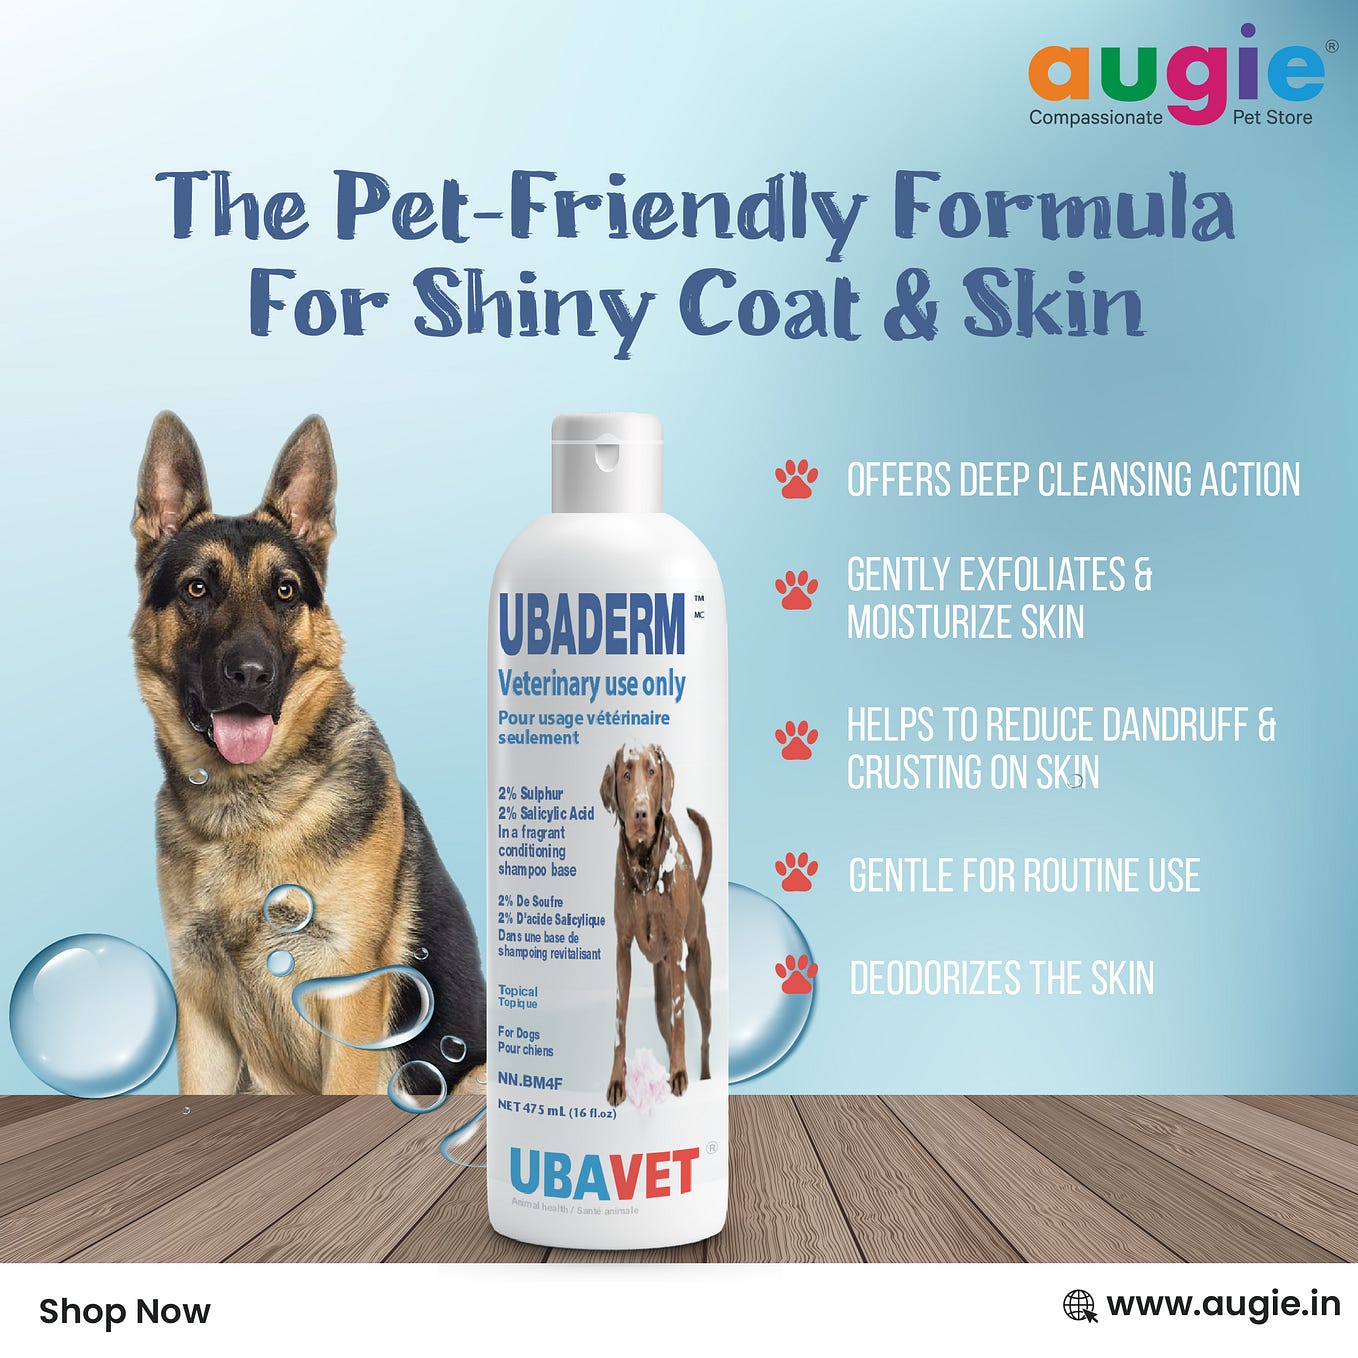 The Pet-Friendly Formula For Shiny coat & skin